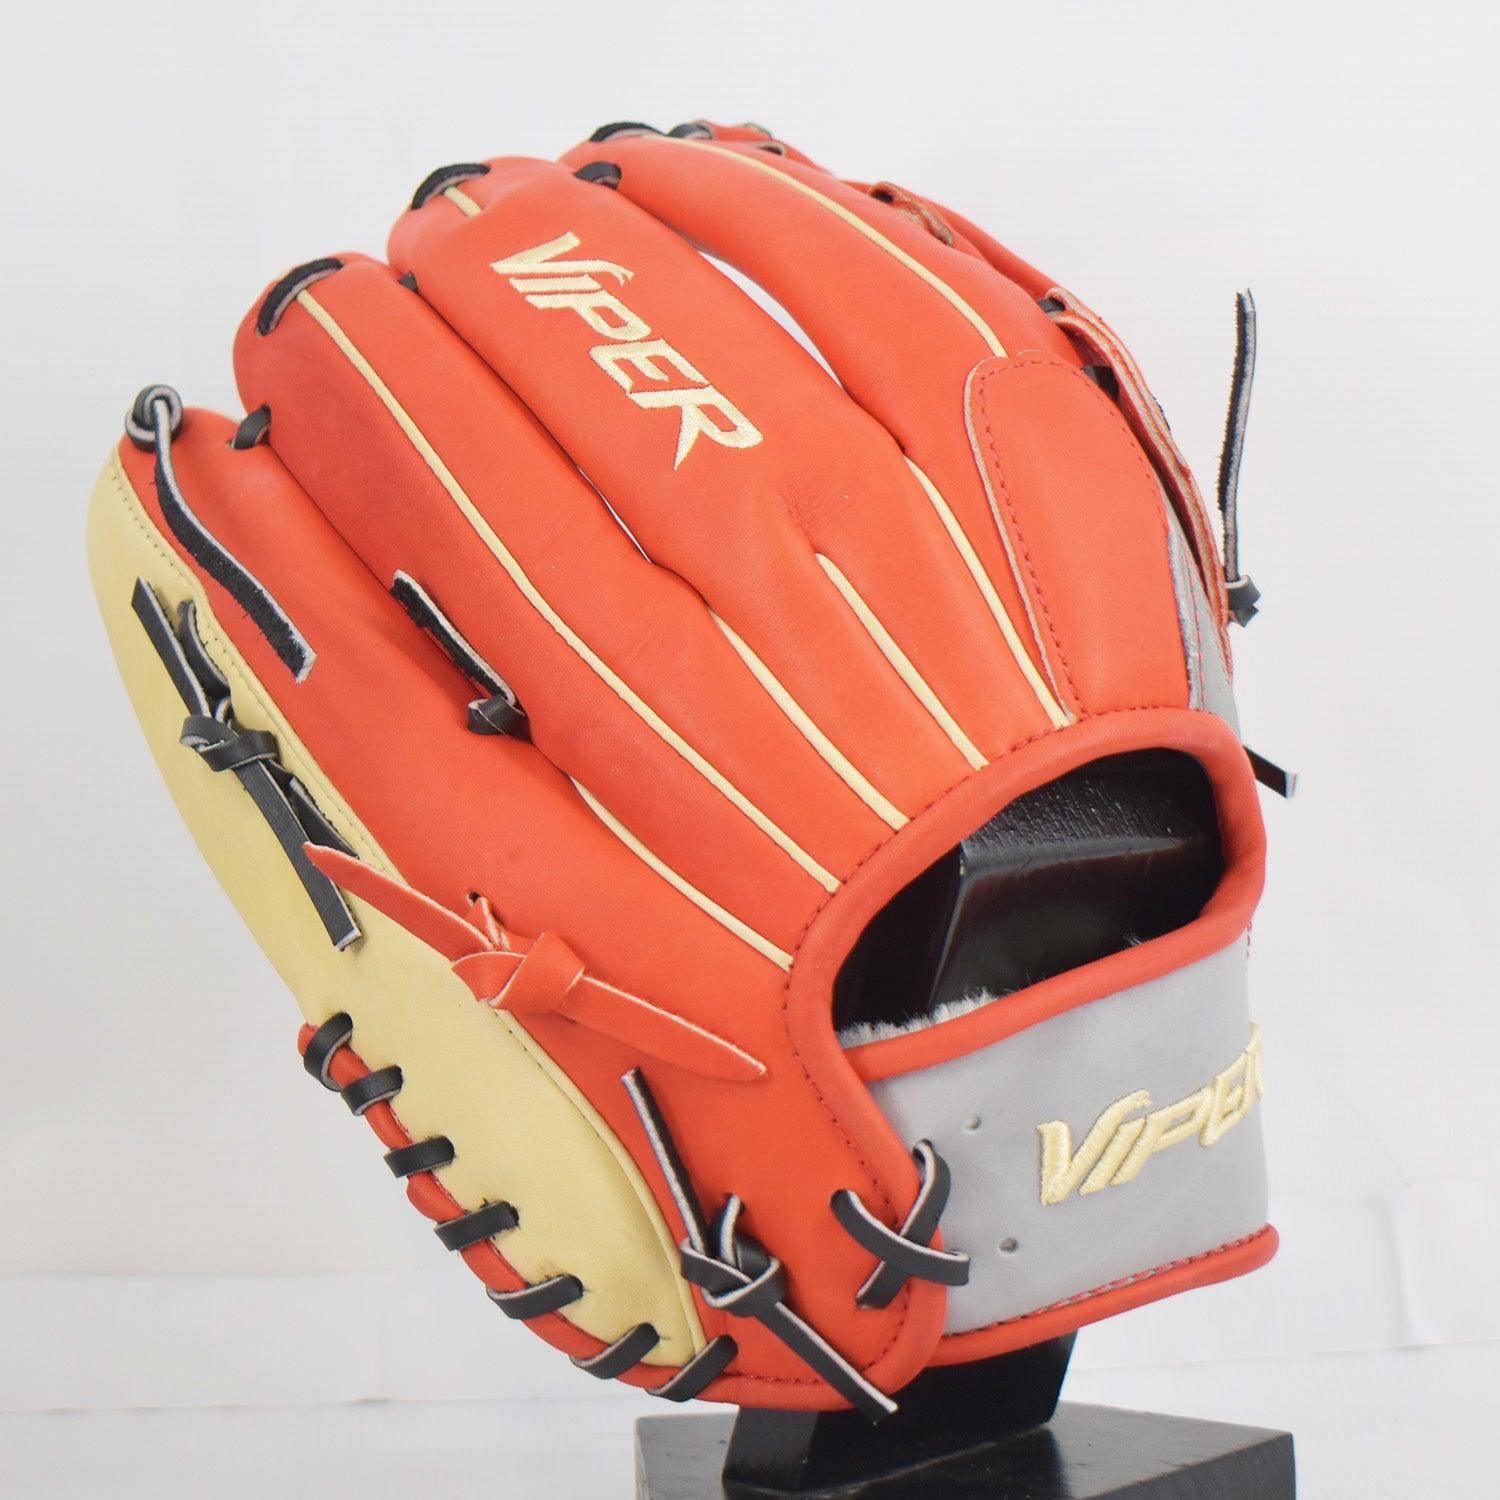 Viper Japanese Kip Leather Slowpitch Softball Fielding Glove  Red/Grey/Tan